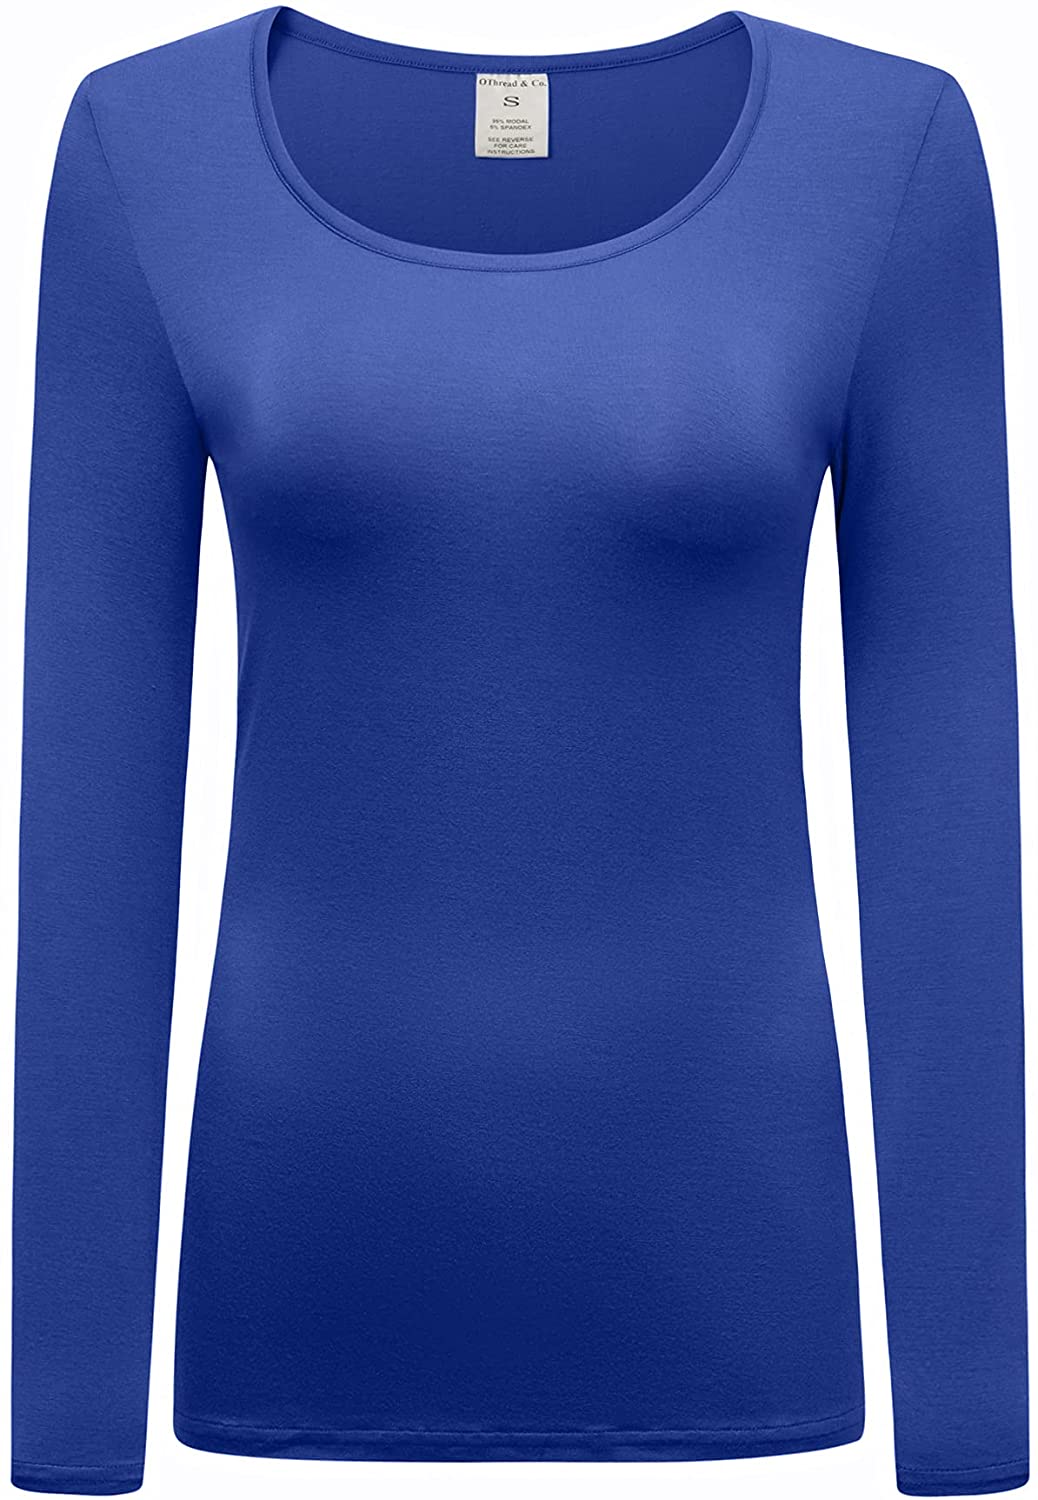 OThread & Co. Women's Long Sleeve T-Shirt Scoop Neck Basic Layer 